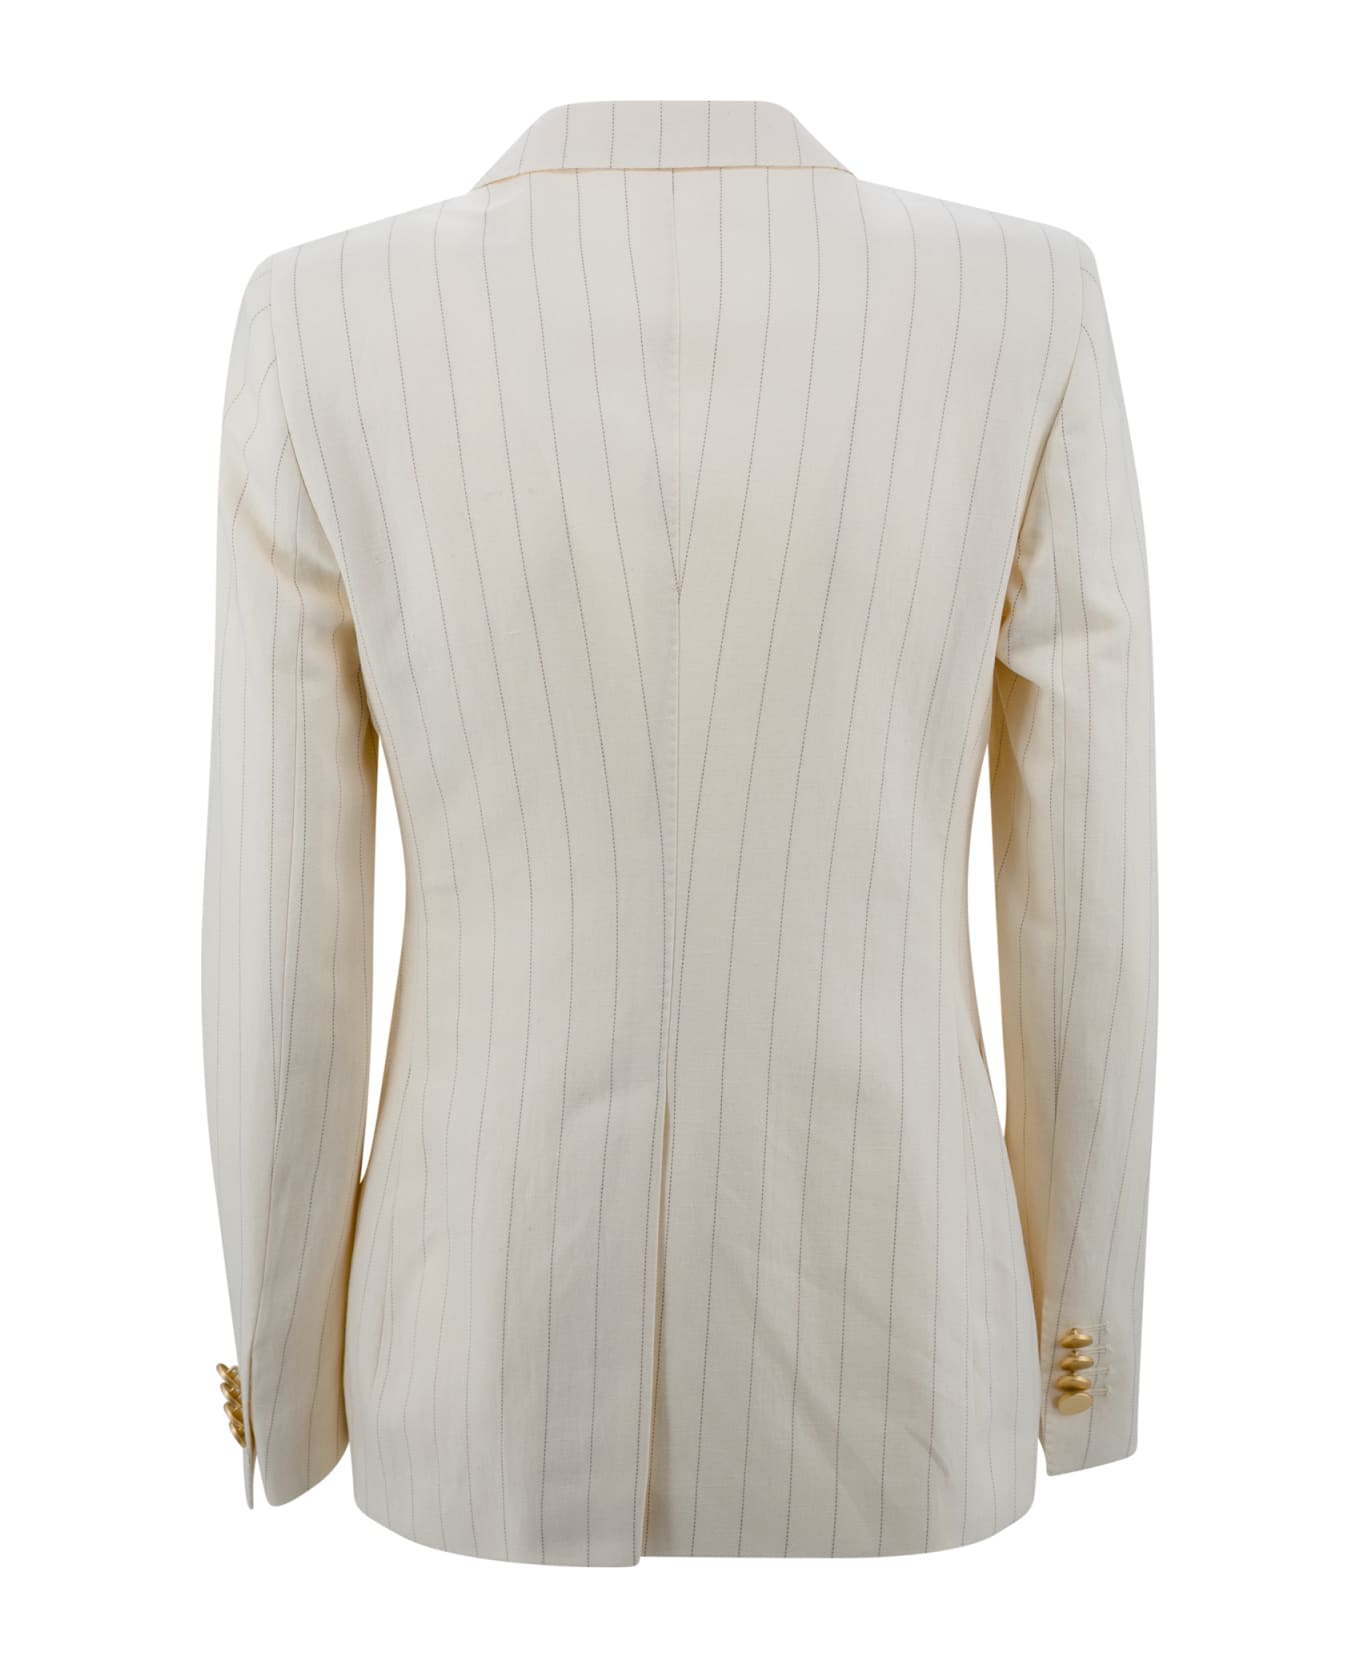 Tagliatore Double-breasted Linen Suit - White